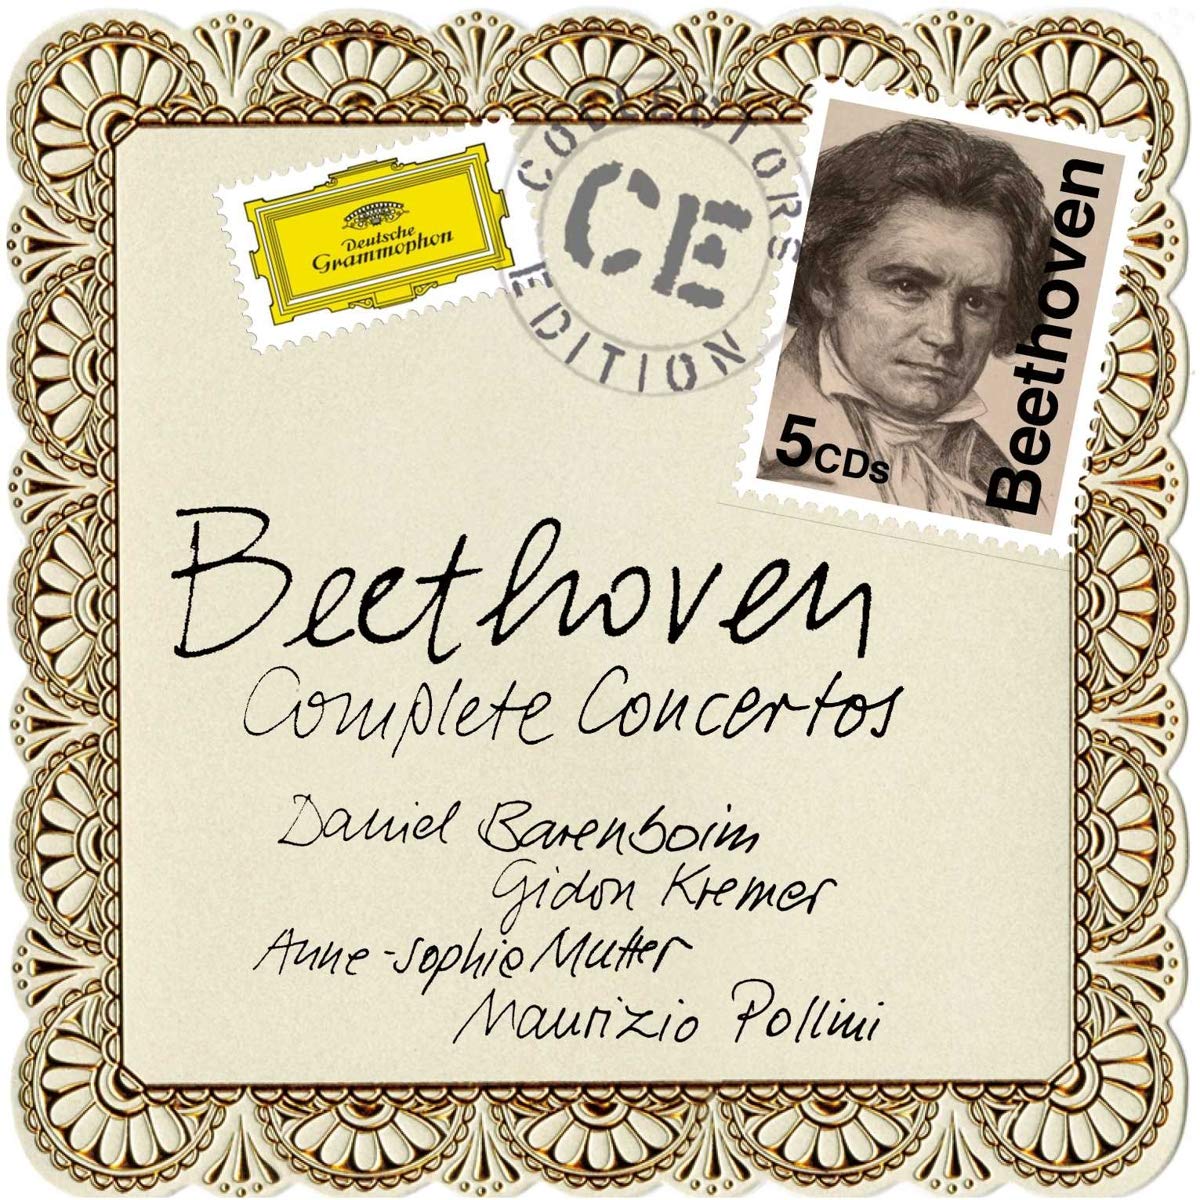 Beethoven: Complete Concertos (Kremer, Barenboim, Mutter, Pollini - 5 CDs)